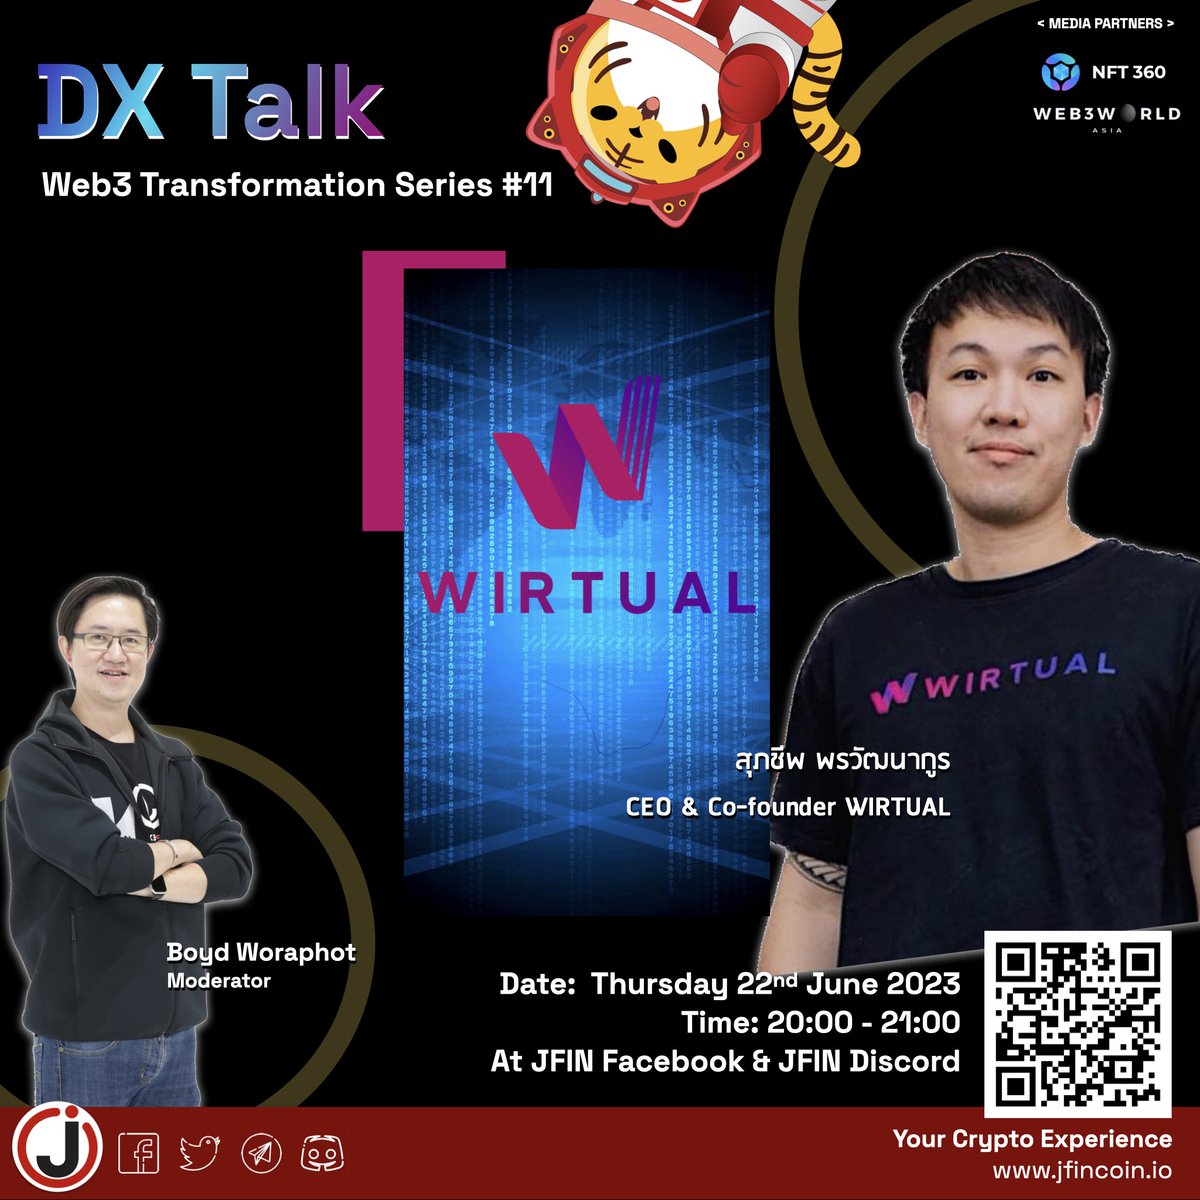 DX Talk Web3 Transformation Series #11 : Wirtual

พบกับซีรีส์ Talk สู่ Digital Transformation  ' DX Talk Web3 Transformation Series'

#Jiger #JFIN #JFINChain #Wirtual #MovetoEarn #ExercisetoEarn #Web3Transformation #DigitalTransformation